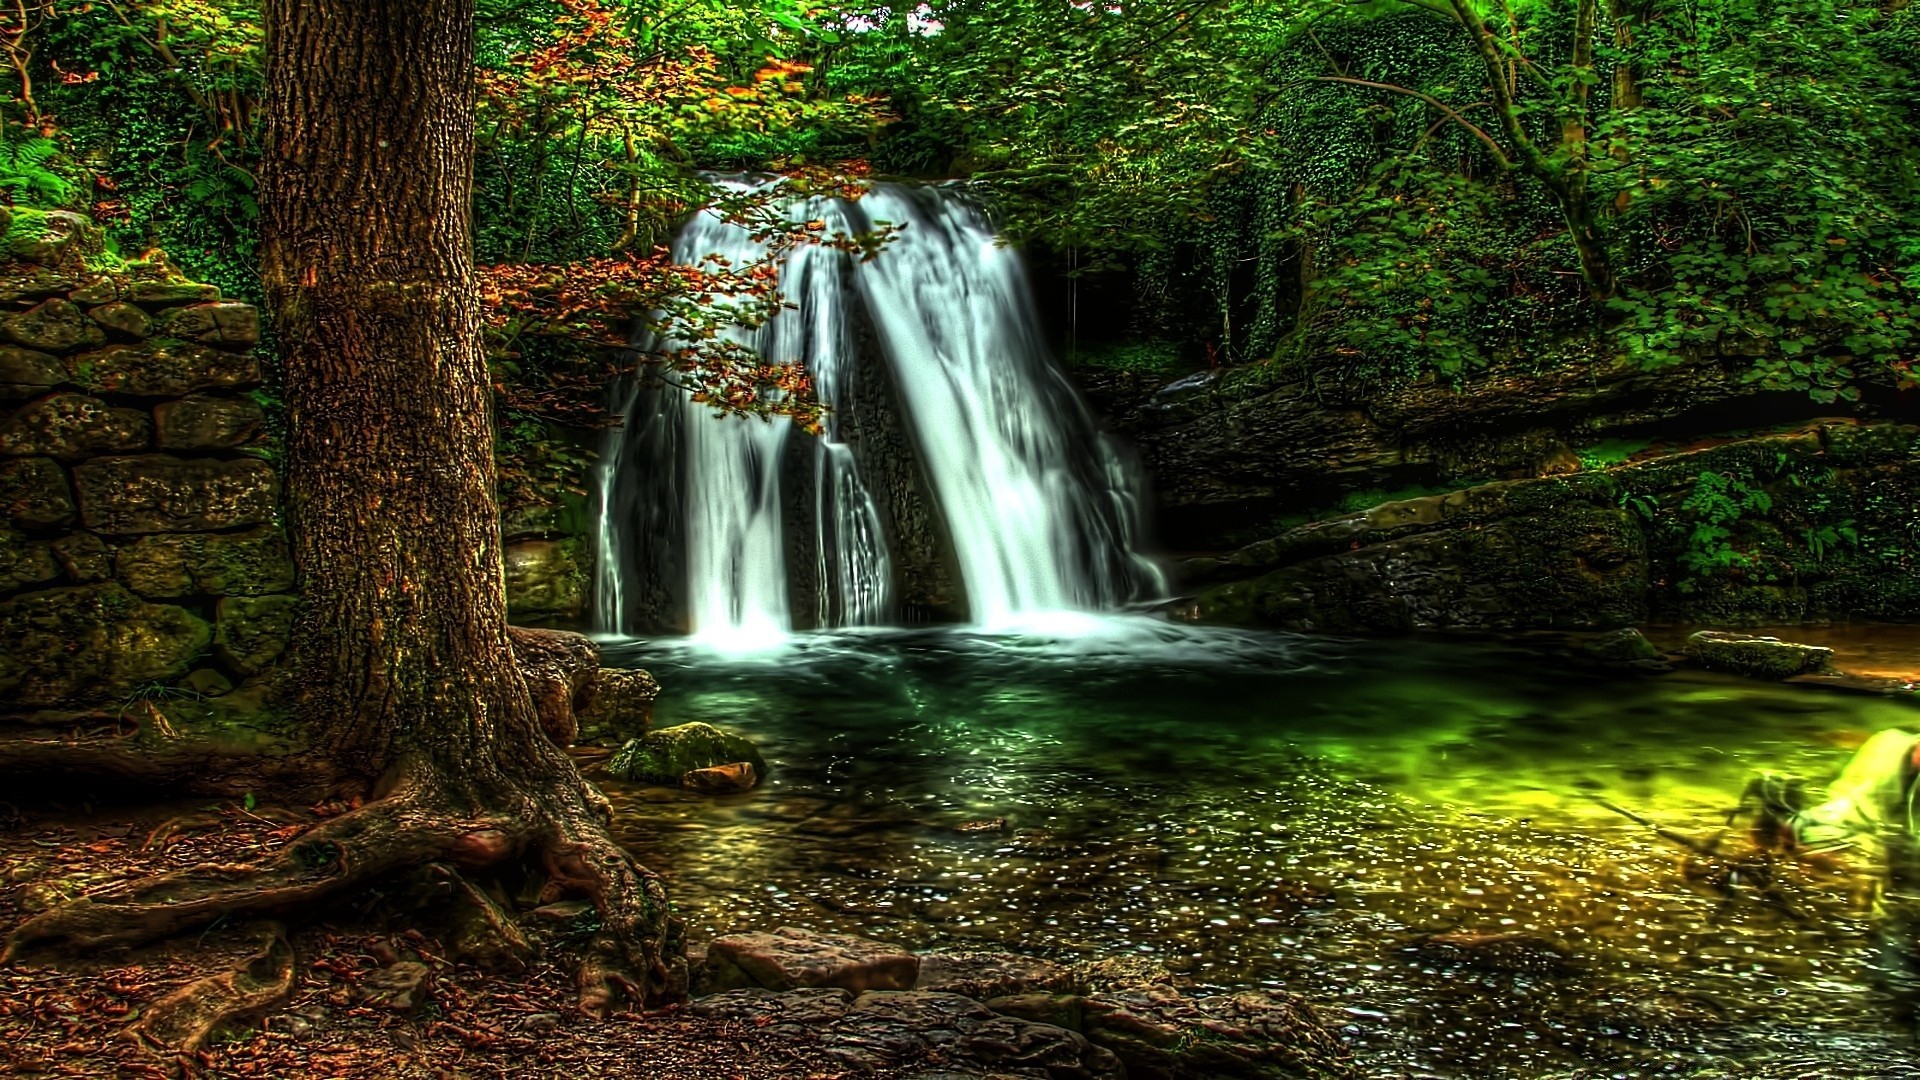 Картинки на телефон на заставку красивые живые. Водопад Джур Джур. Природа. Живая природа водопады. Красивые водопады.